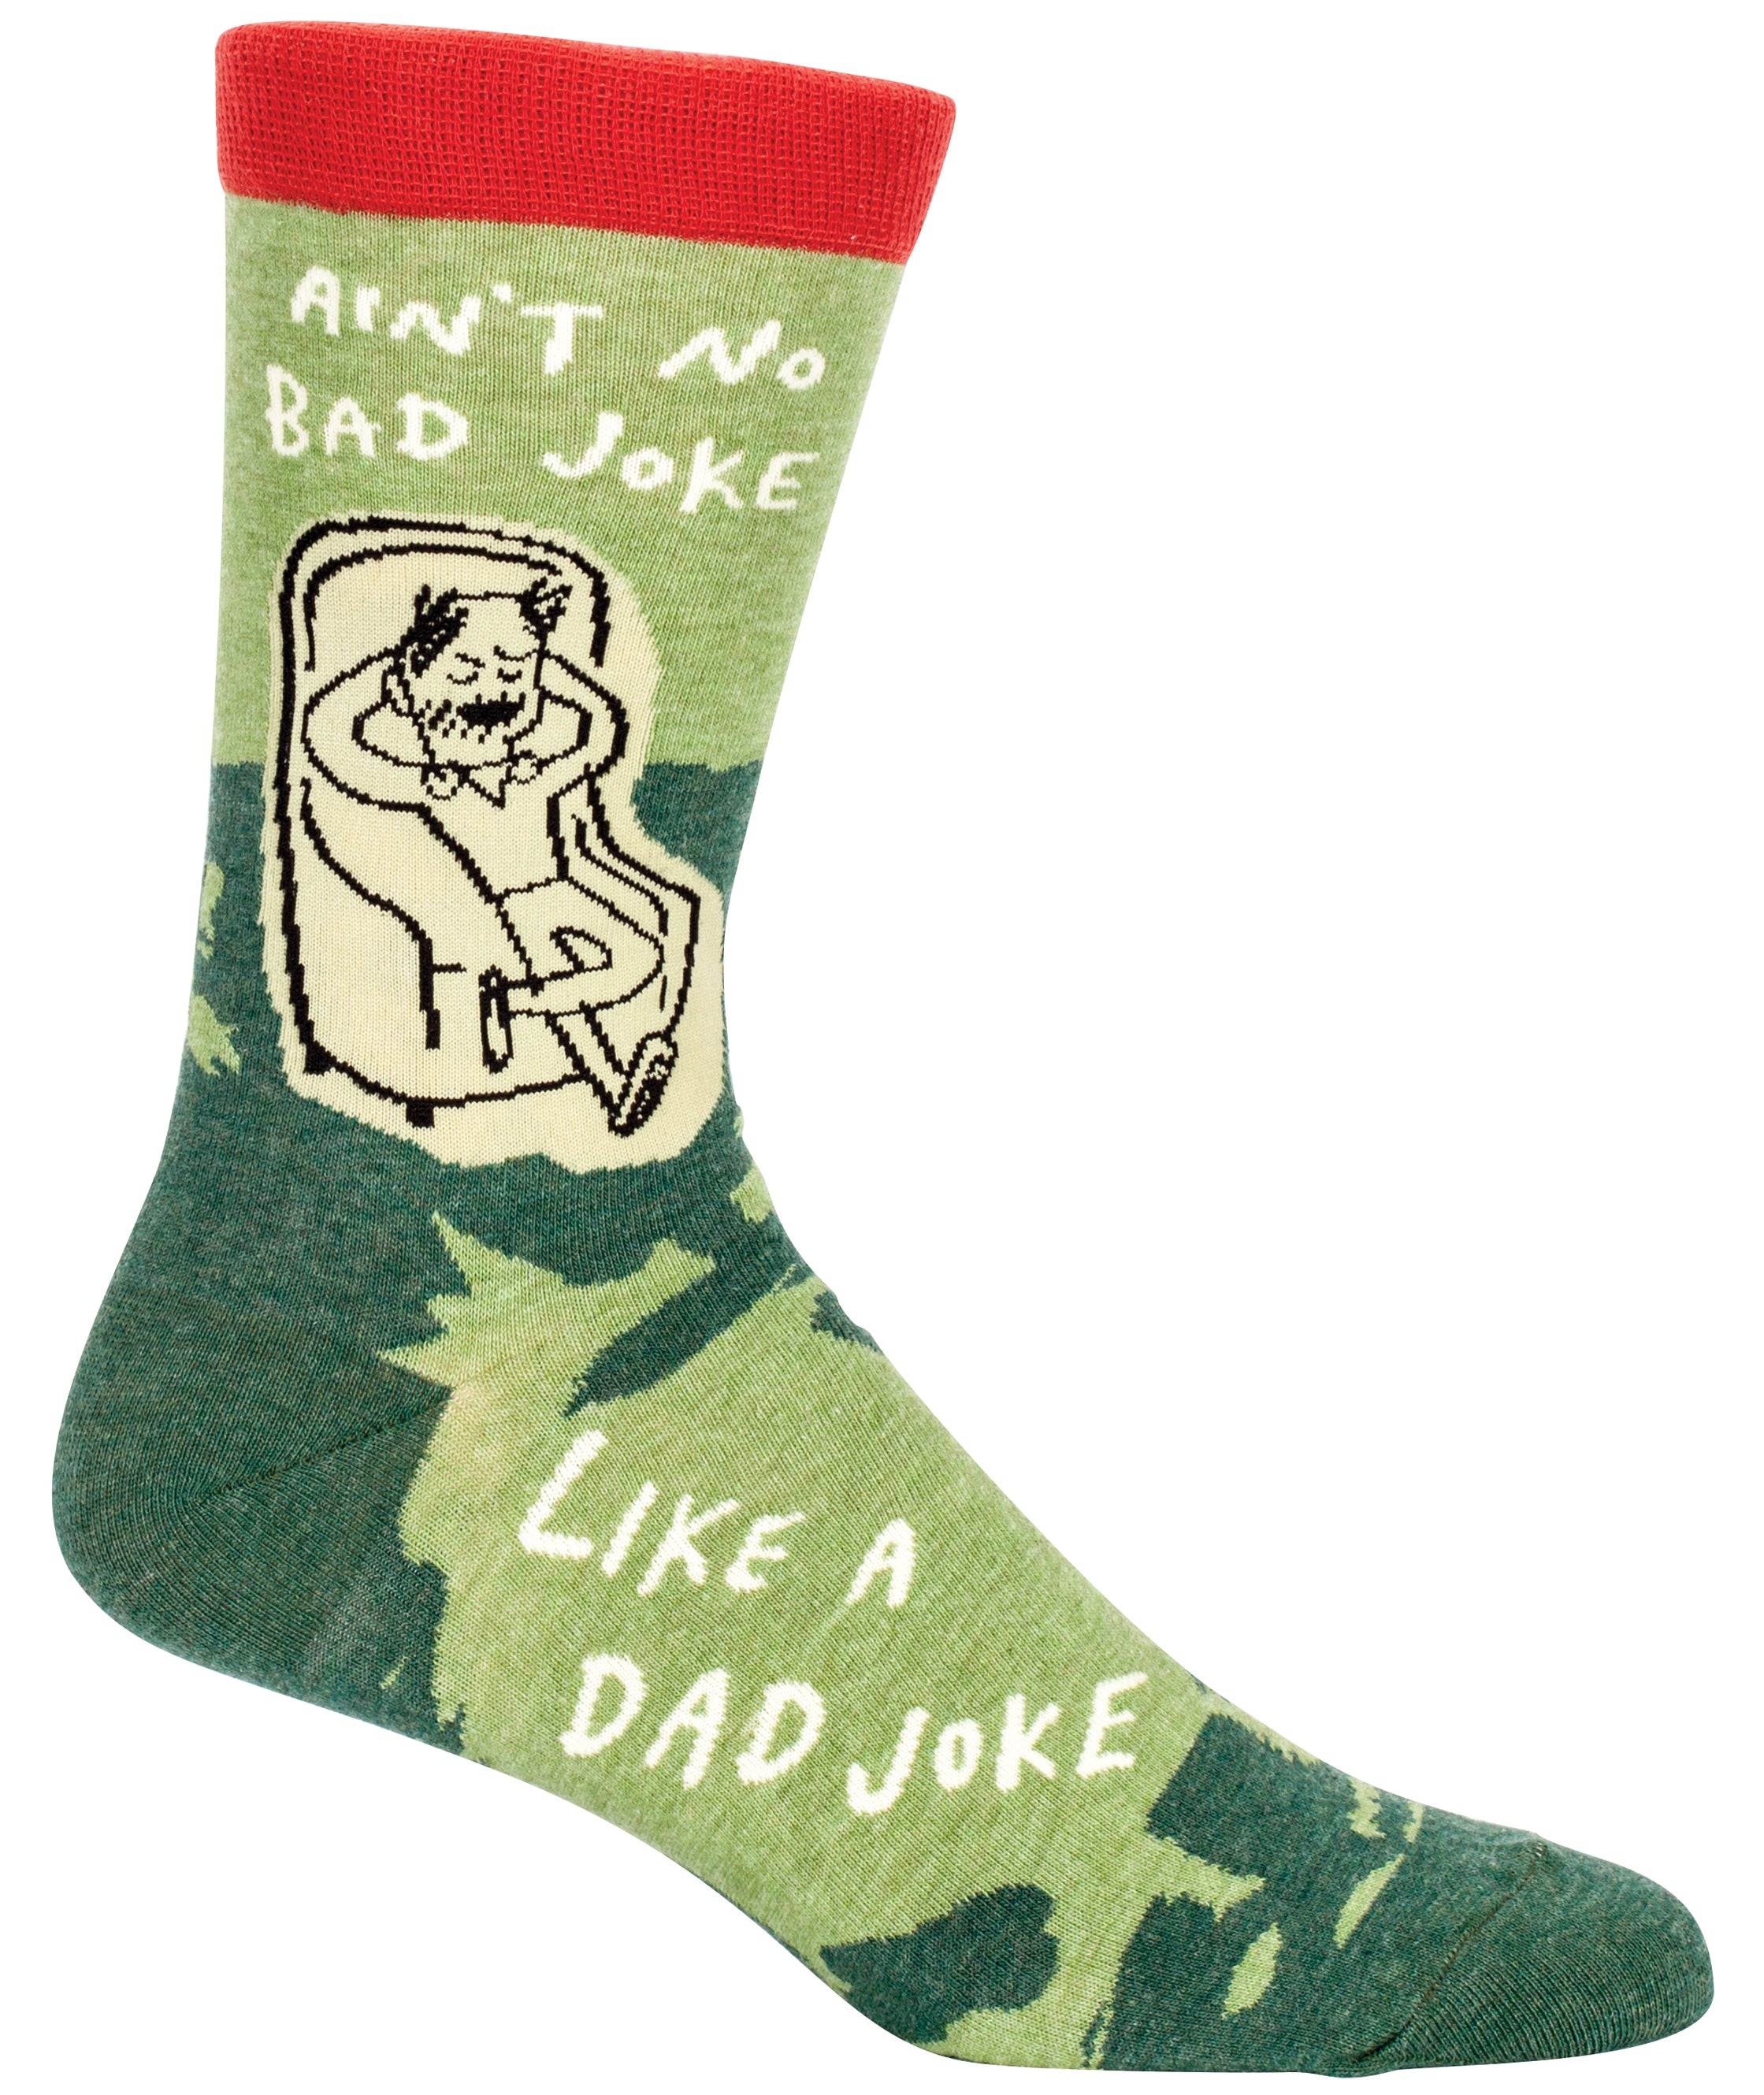 blue q mens socks dad joke